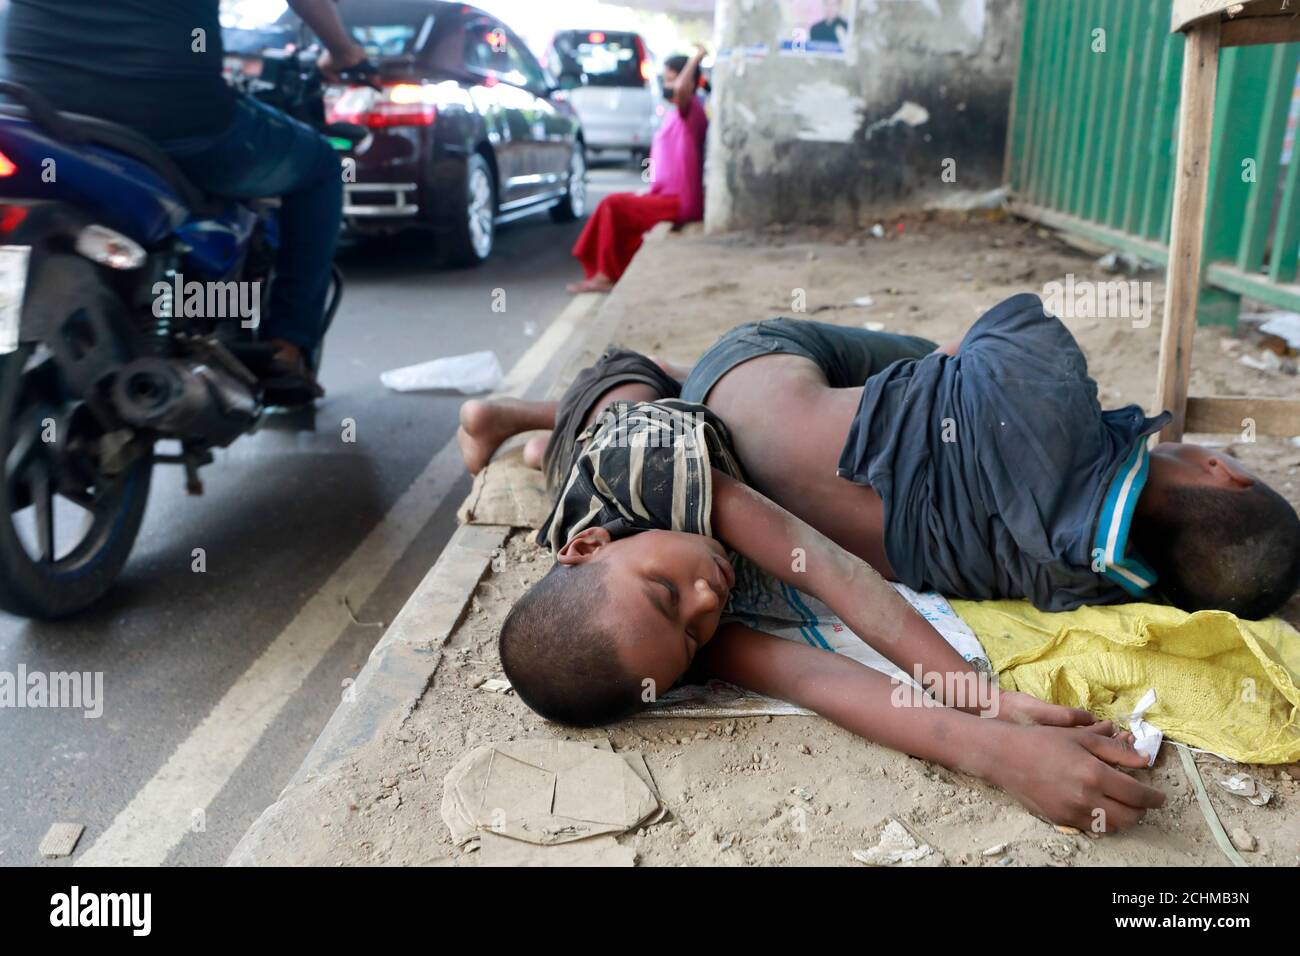 Dhaka, Bangladesh - September 13, 2020: Bangladeshi homeless children sleep on a roadside footpath in Dhaka, Bangladesh on September 13, 2020. Stock Photo